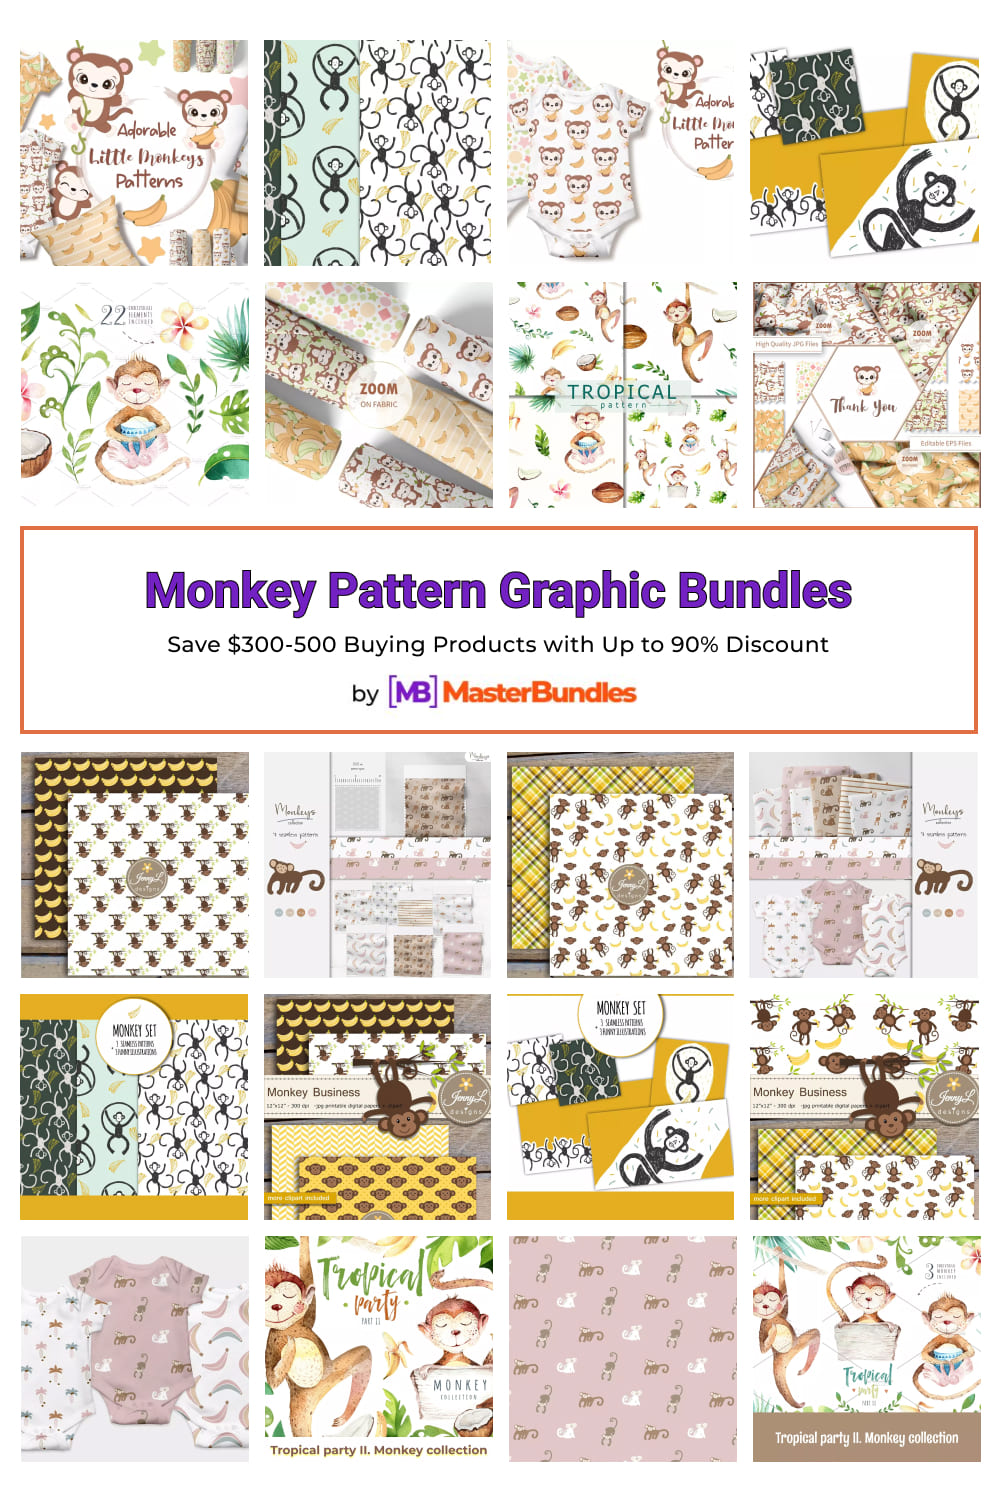 Monkey Pattern Graphic Bundles for pinterest.